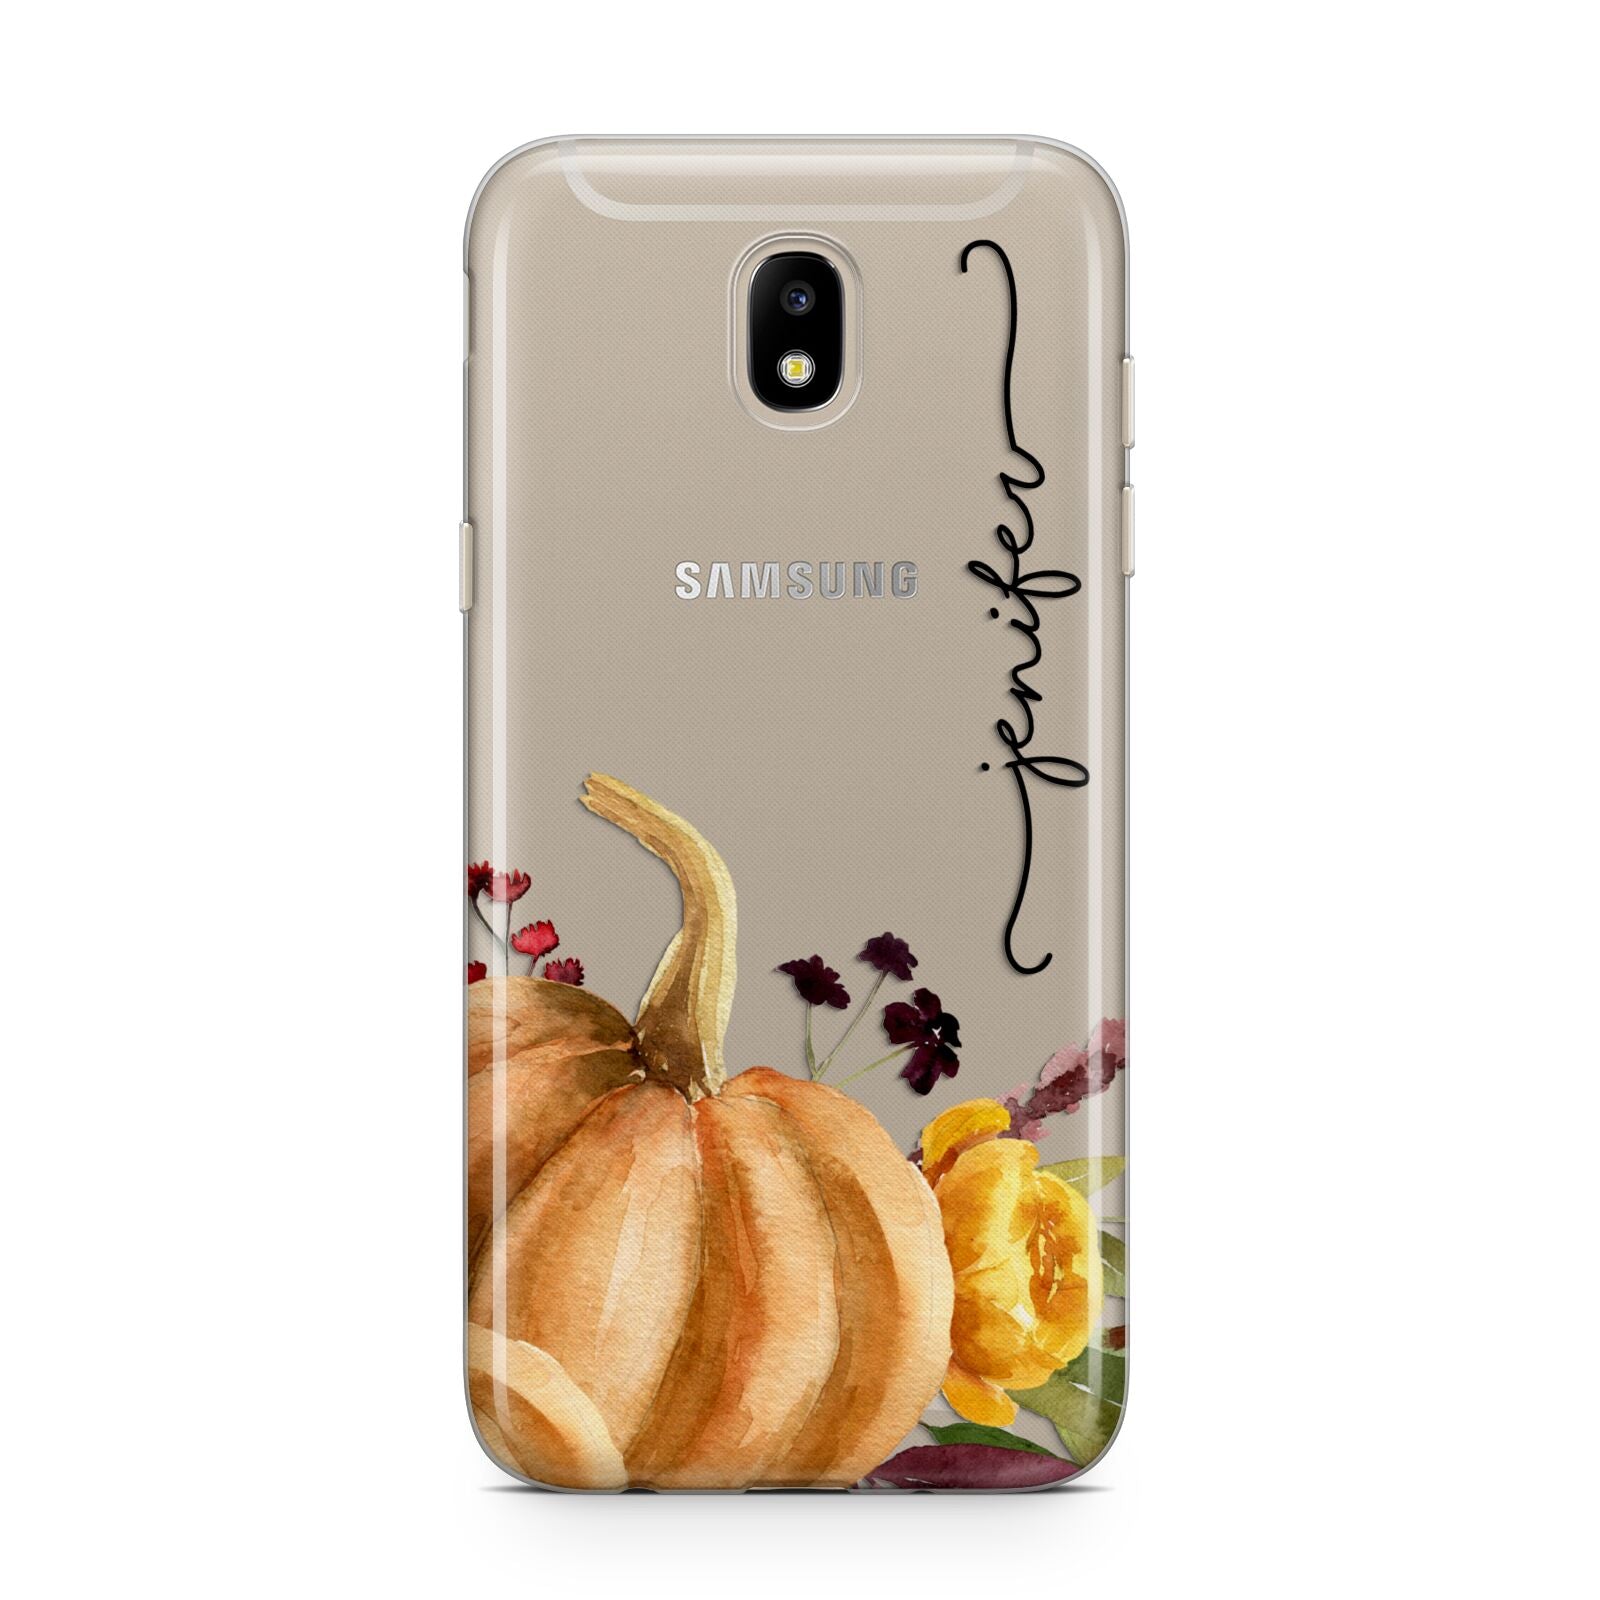 Watercolour Pumpkins with Black Vertical Text Samsung J5 2017 Case